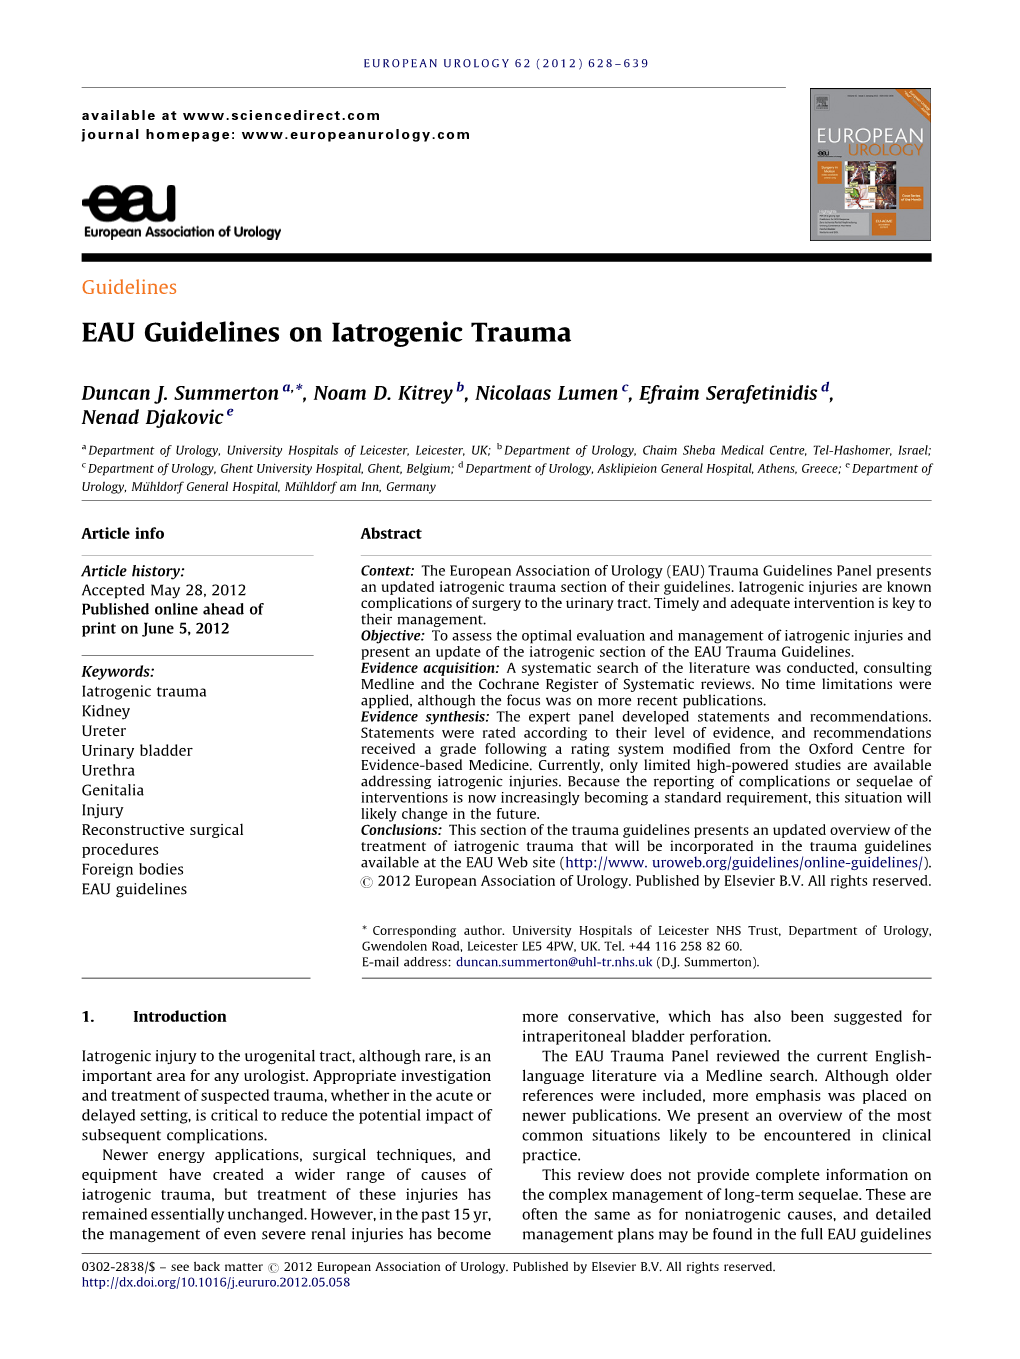 EAU Guidelines on Iatrogenic Trauma